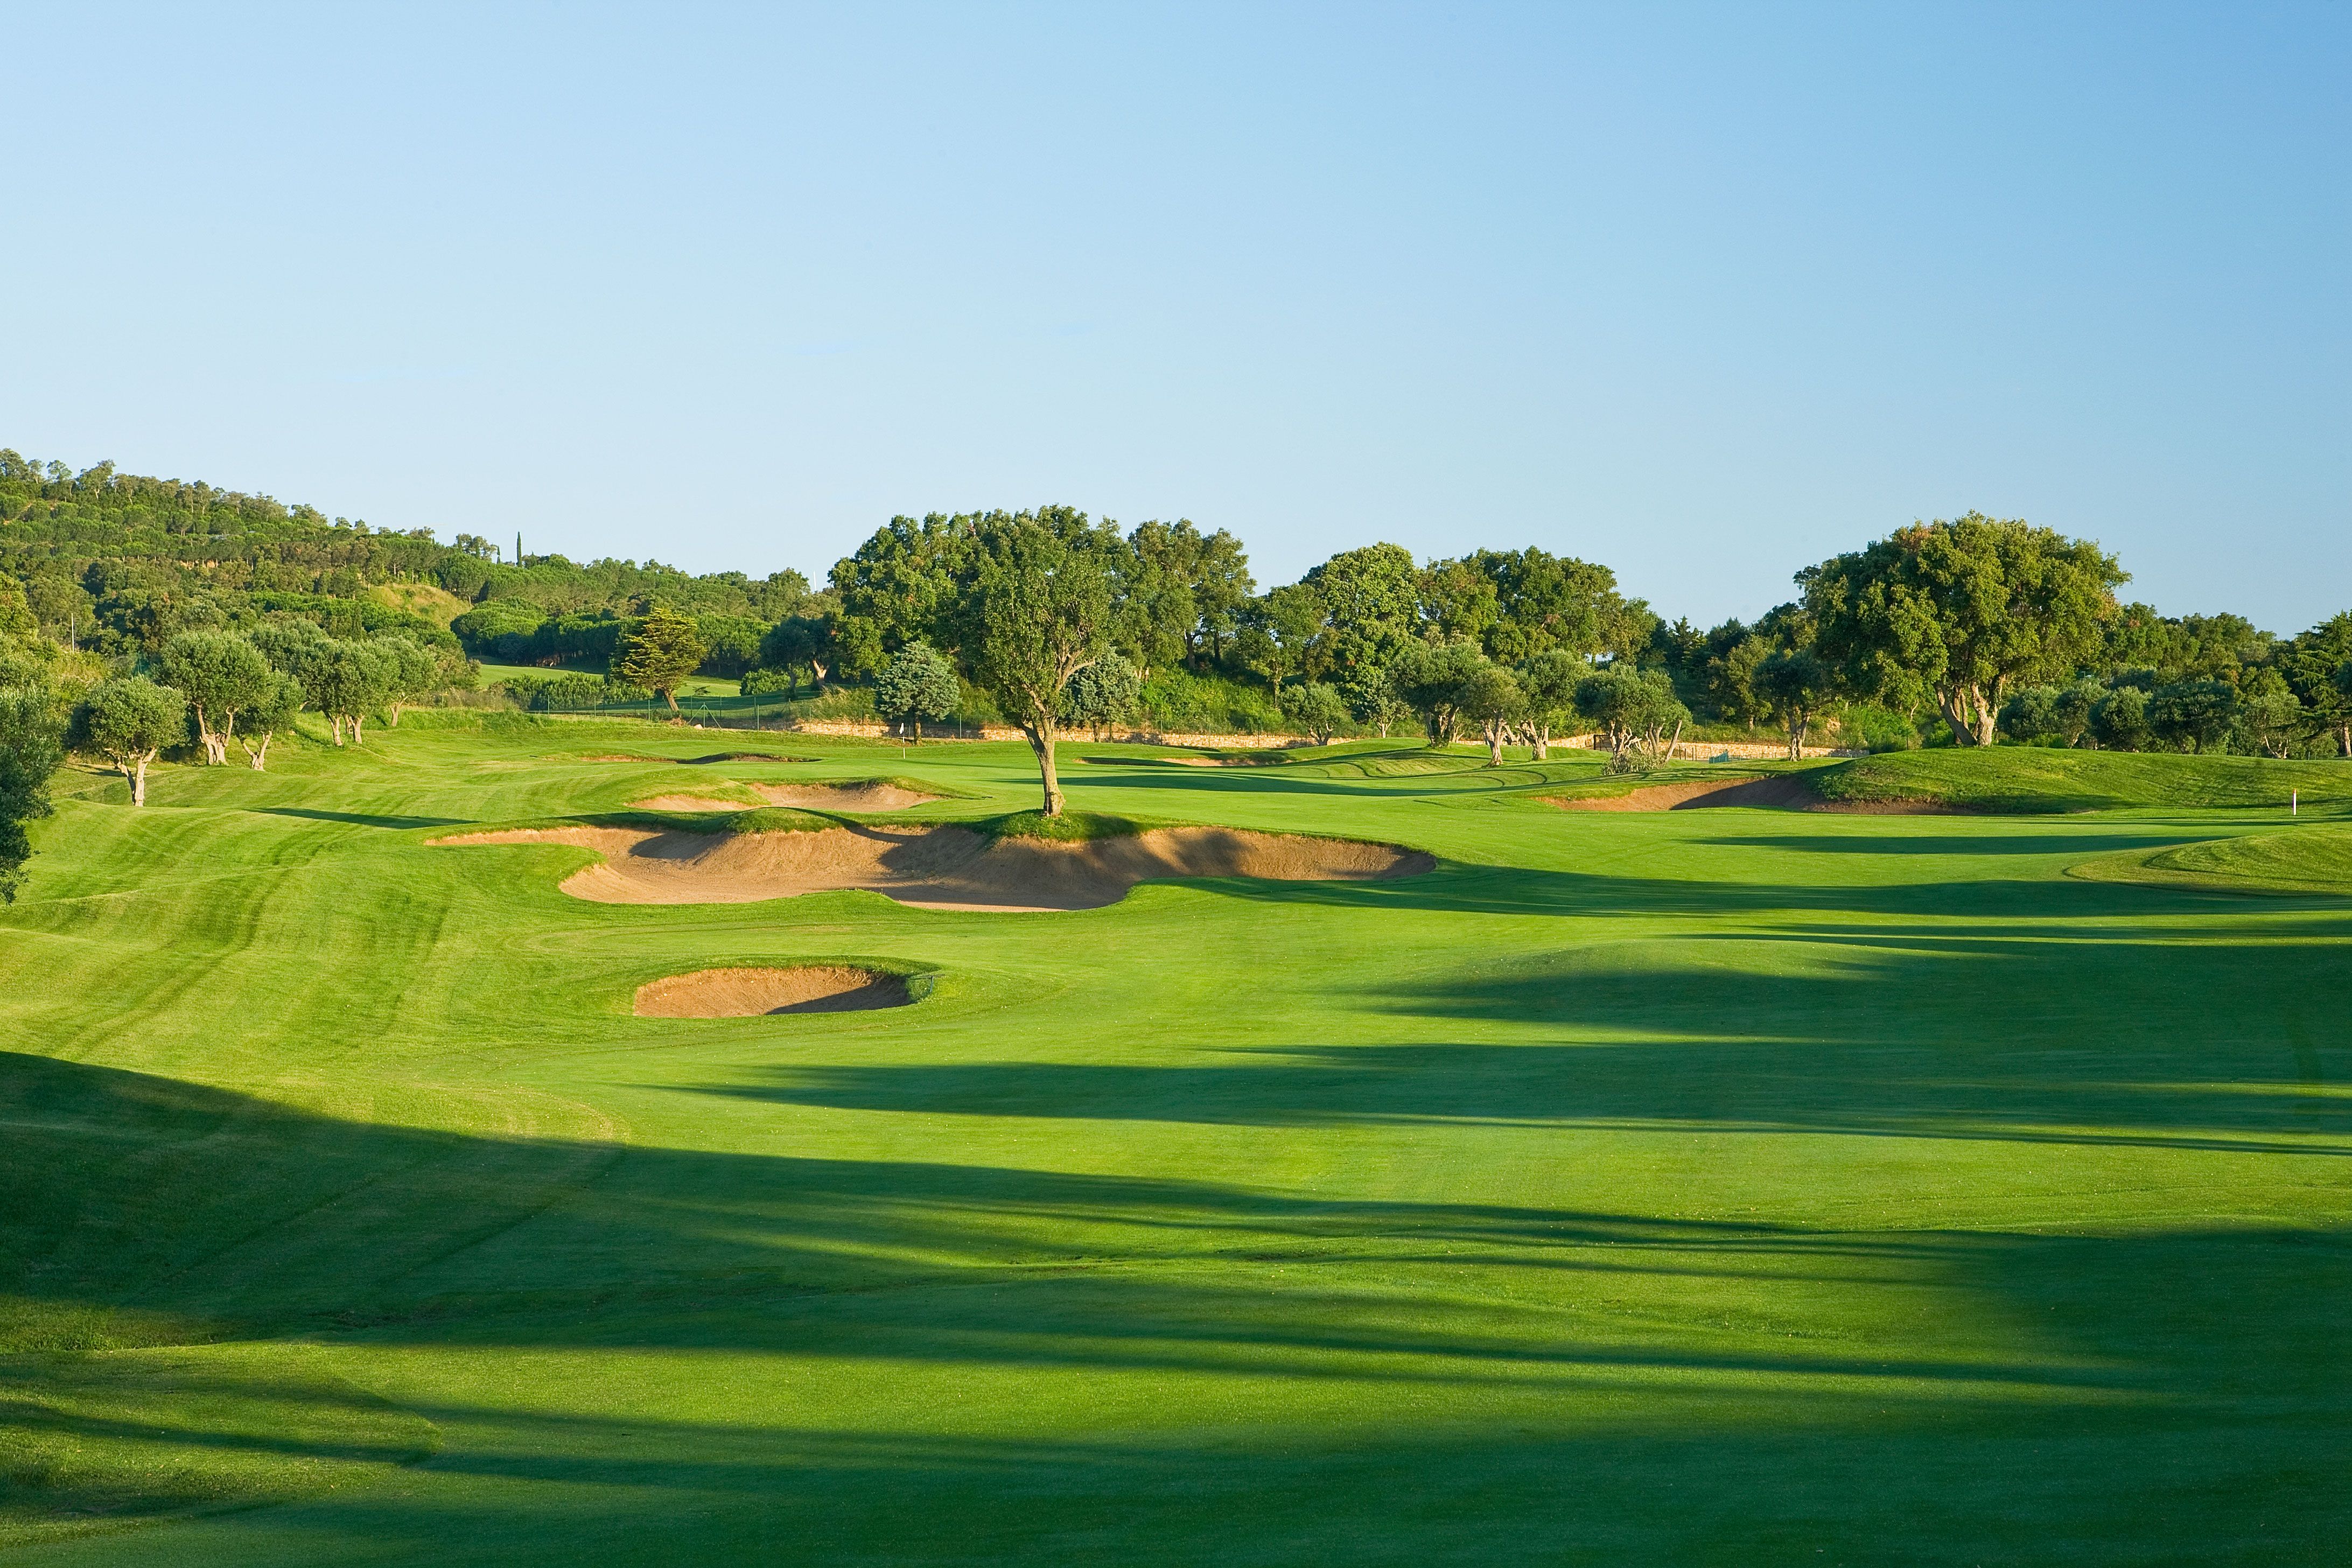 Club Golf d'Aro - Mas Nou - Where the green meets blue